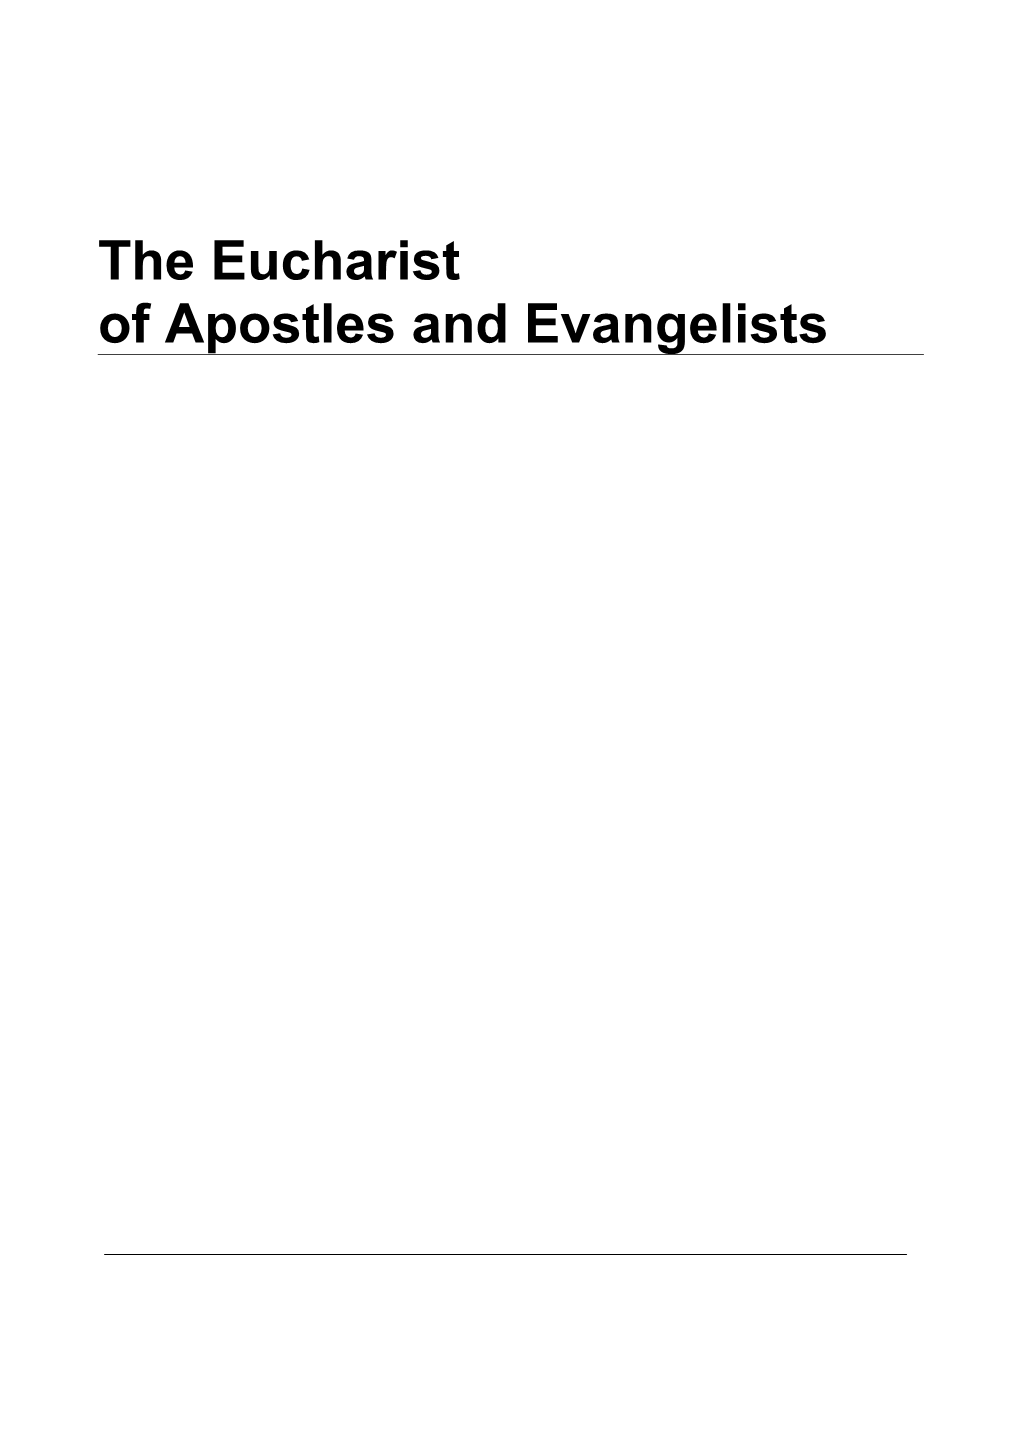 GI Futura - the Eucharist of Apostles and Evangelists